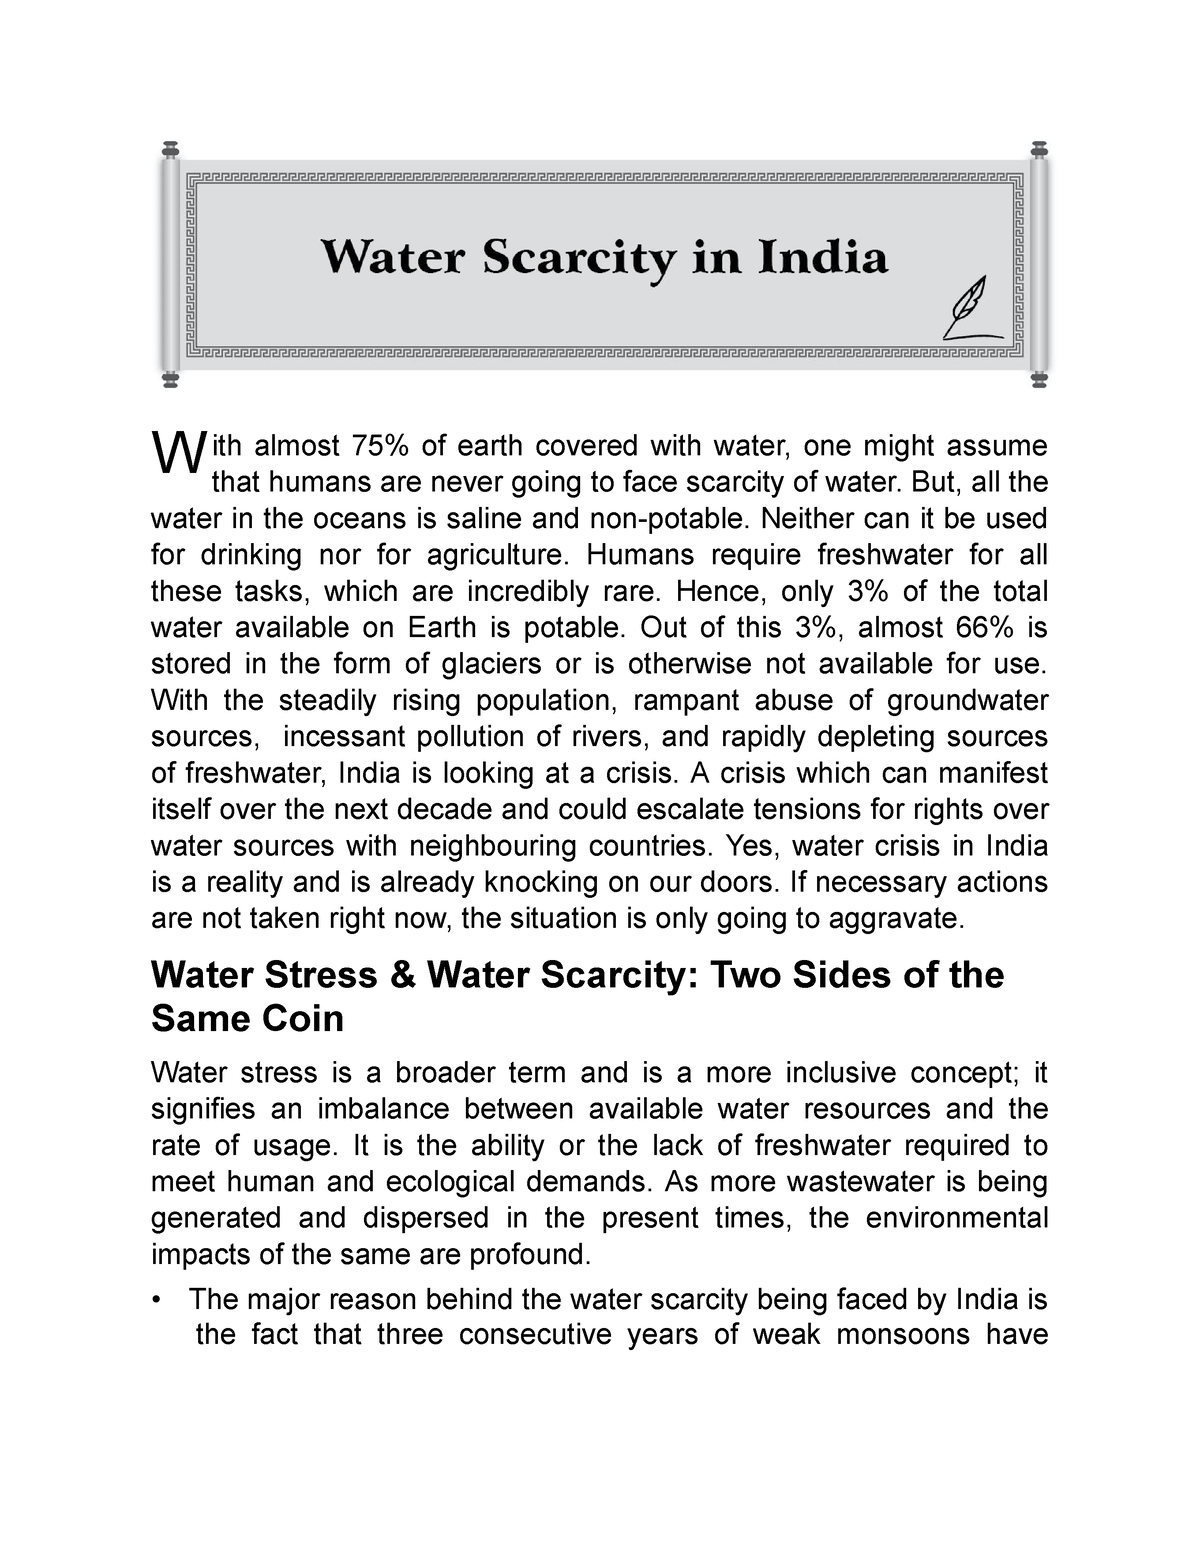 water scarcity short essay